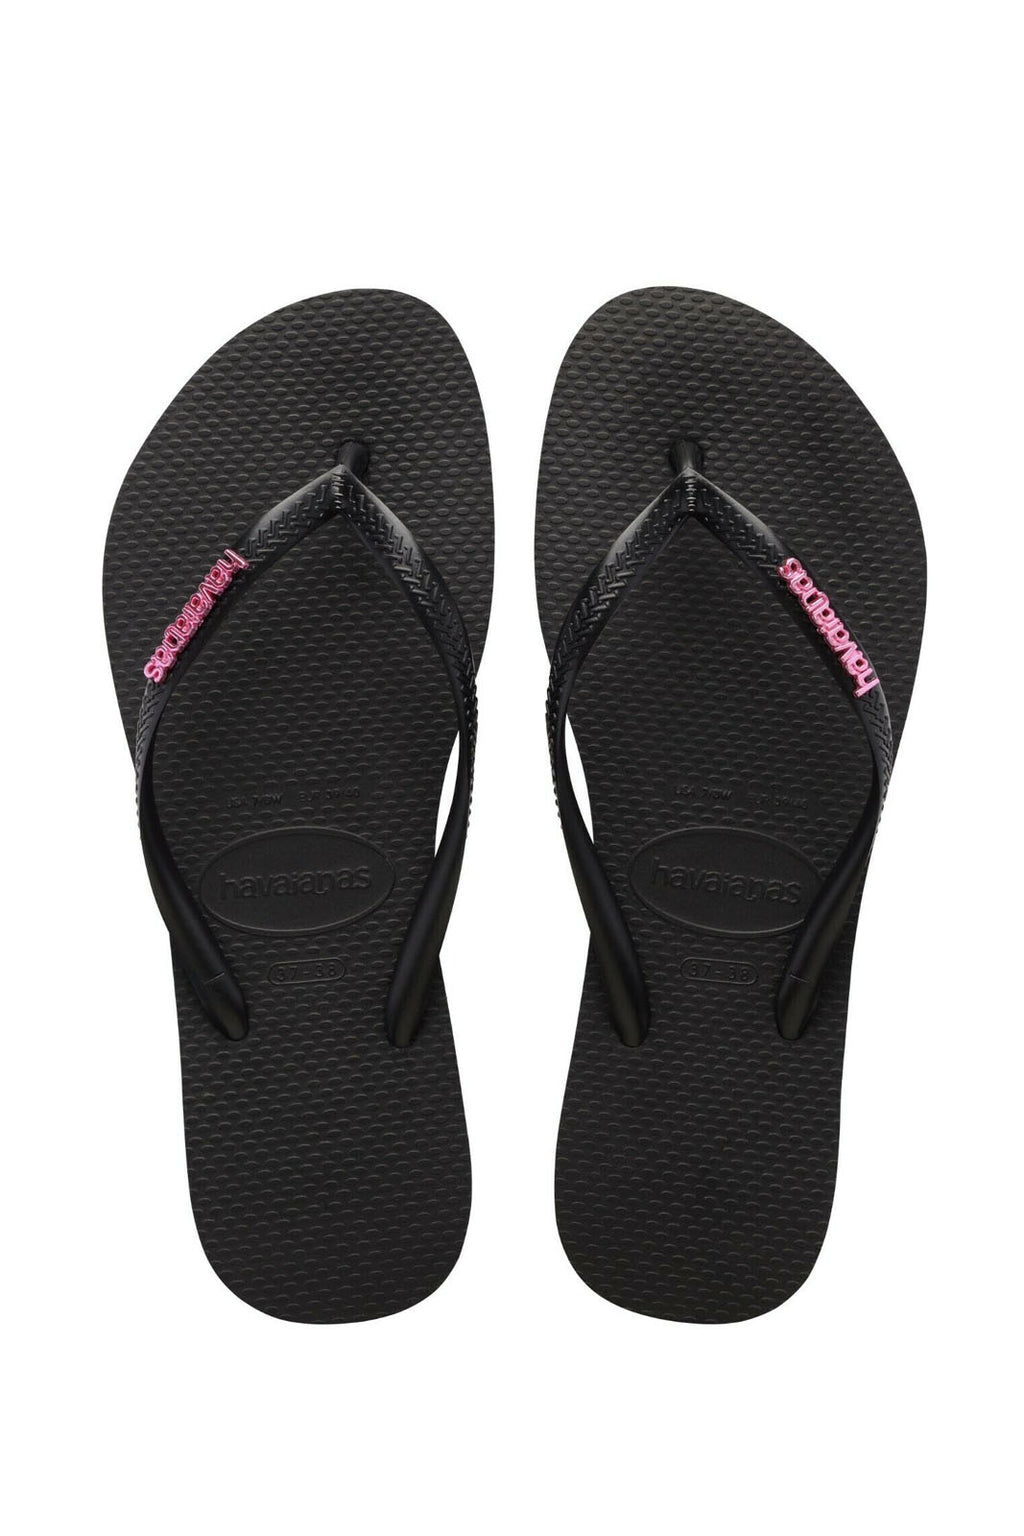 Havaianas Slim Logo Metallic Flip Flops - Black/Pink